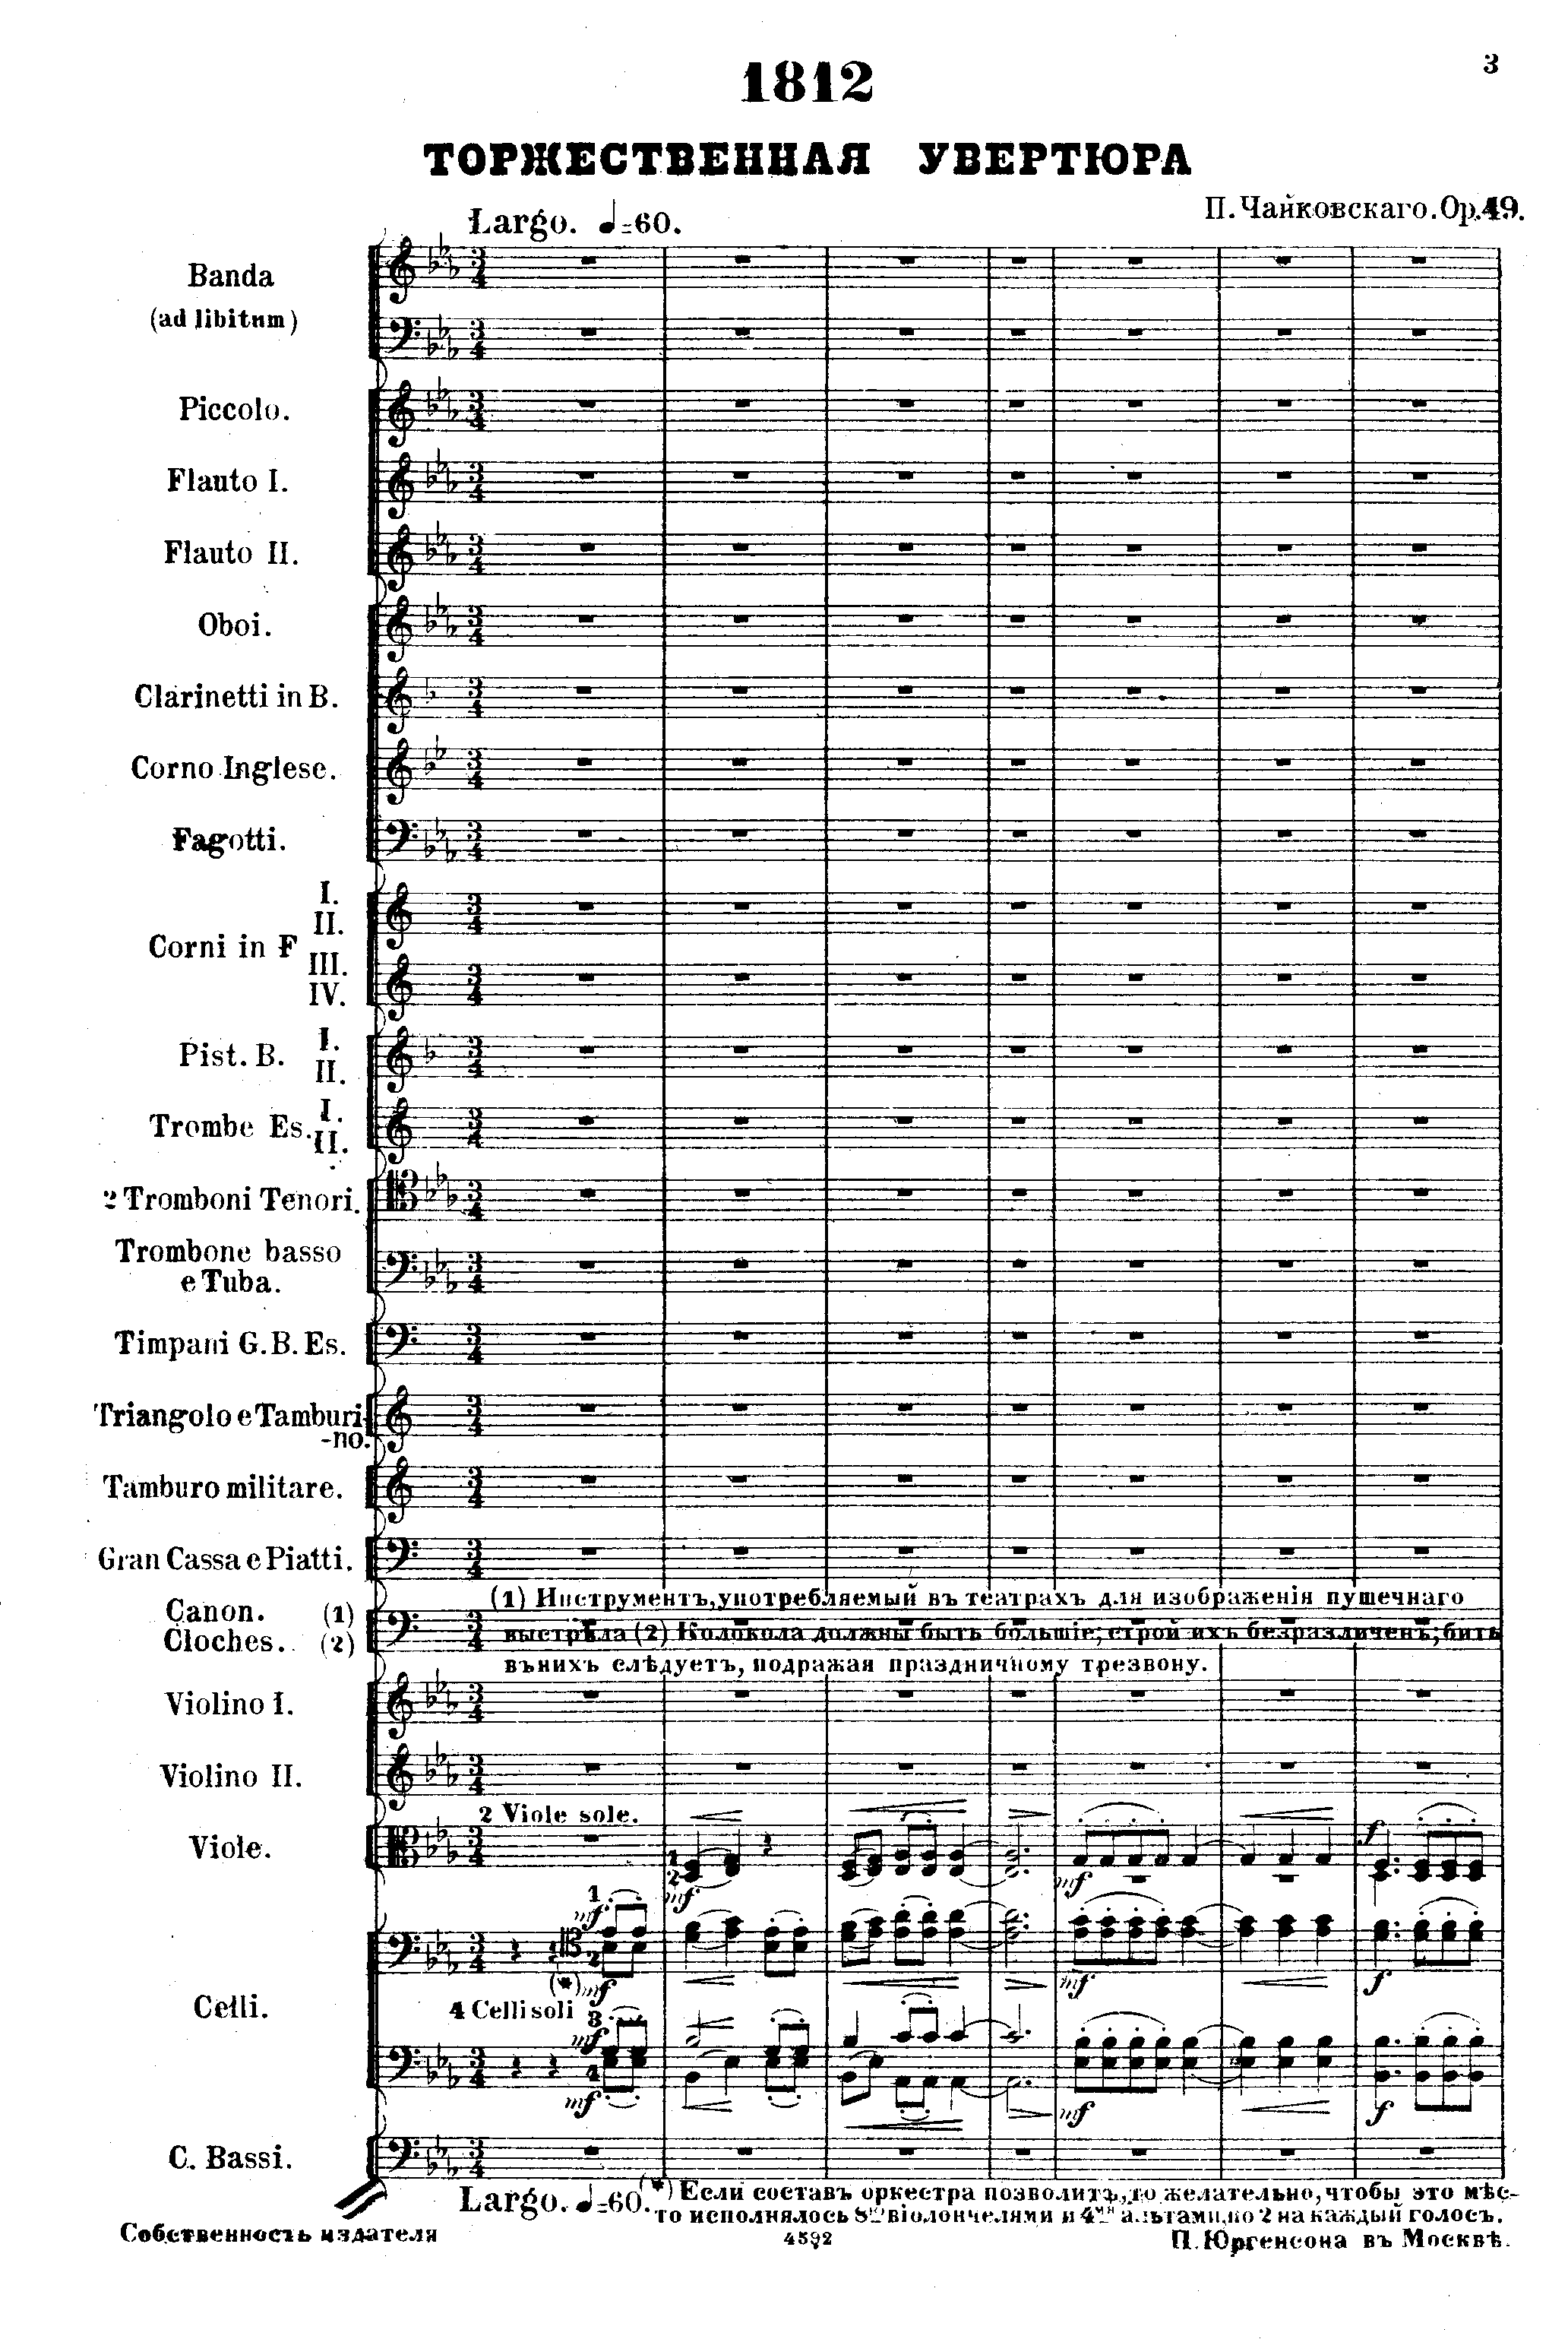 1812 Overture Score